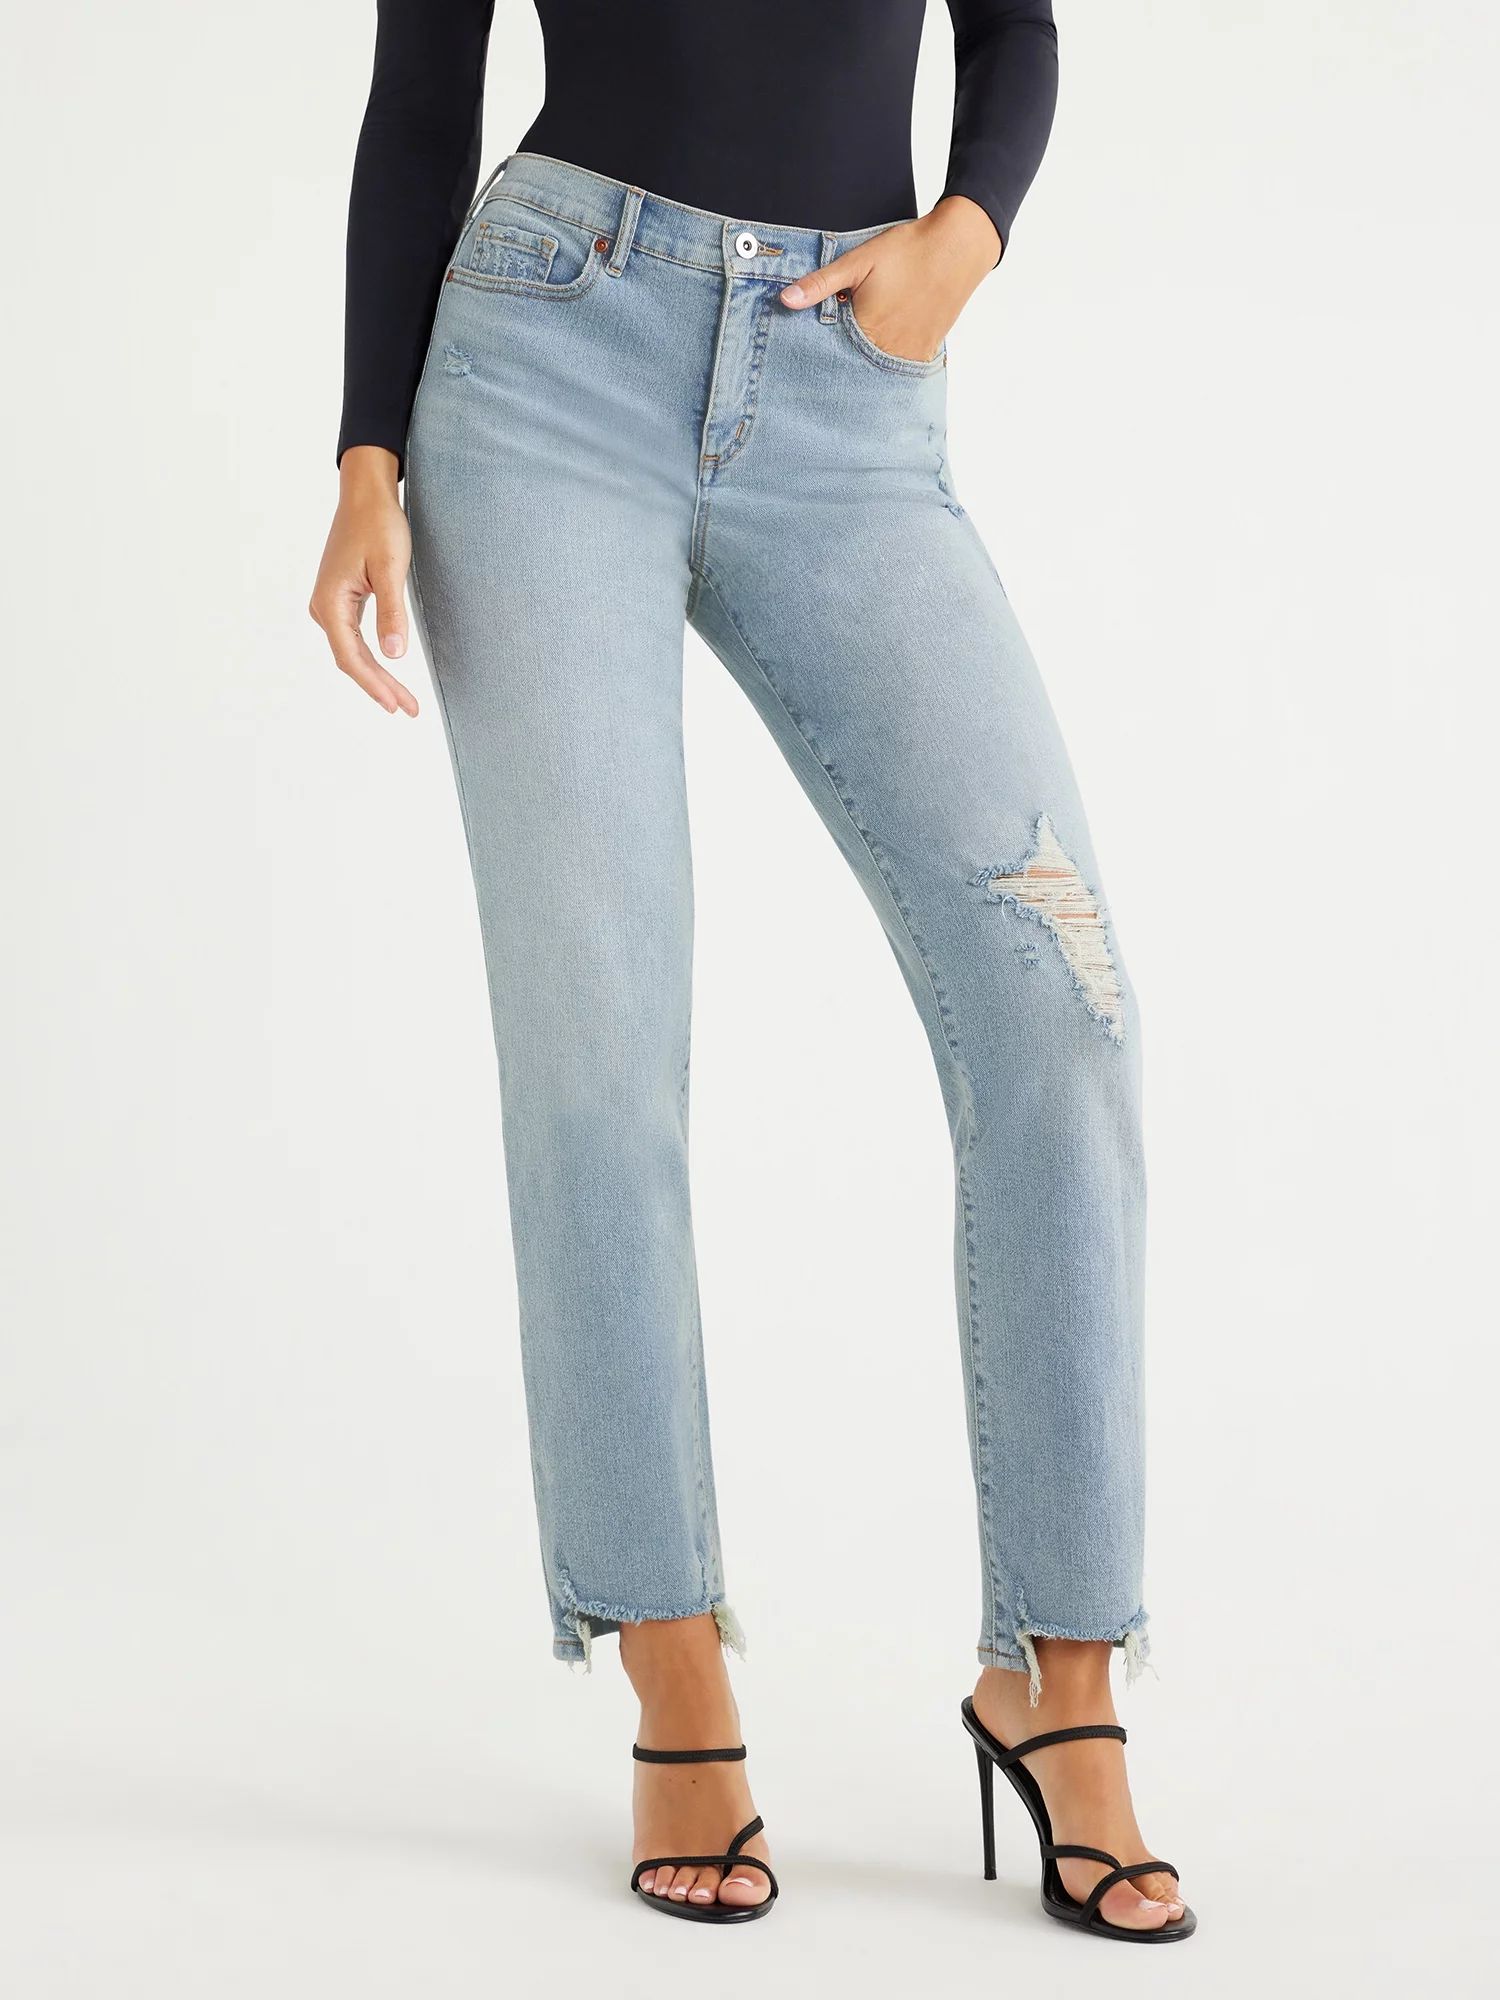 Sofia Jeans Women's Beatrix Slouchy Boyfriend Mid Rise Distressed Jeans, 27" Inseam, Sizes 0-18 | Walmart (US)